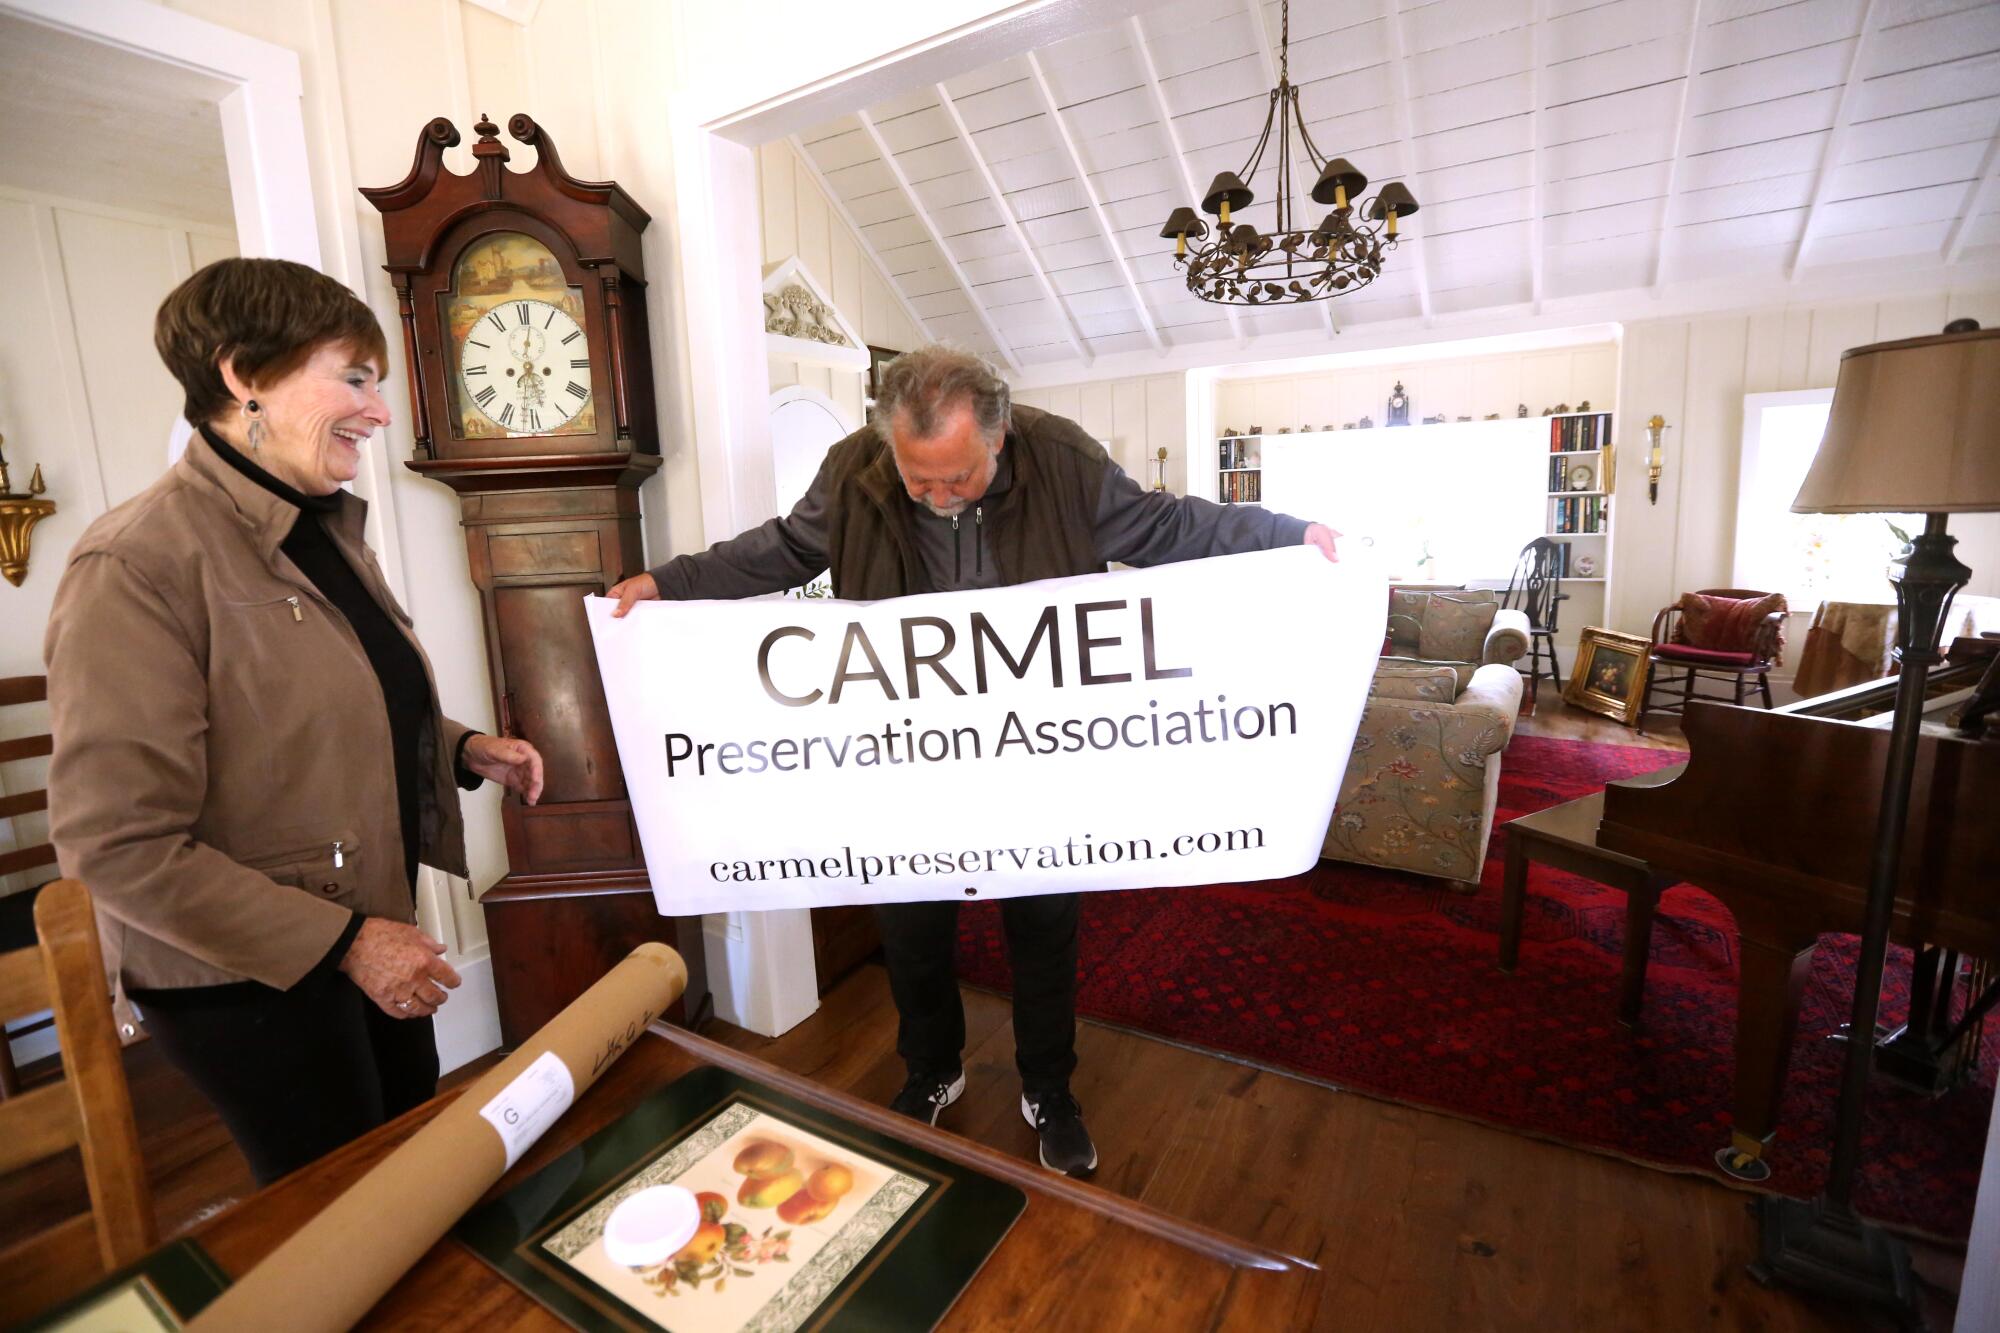 A woman smiles as a man unveils a sign that says Carmel Preservation Association. 